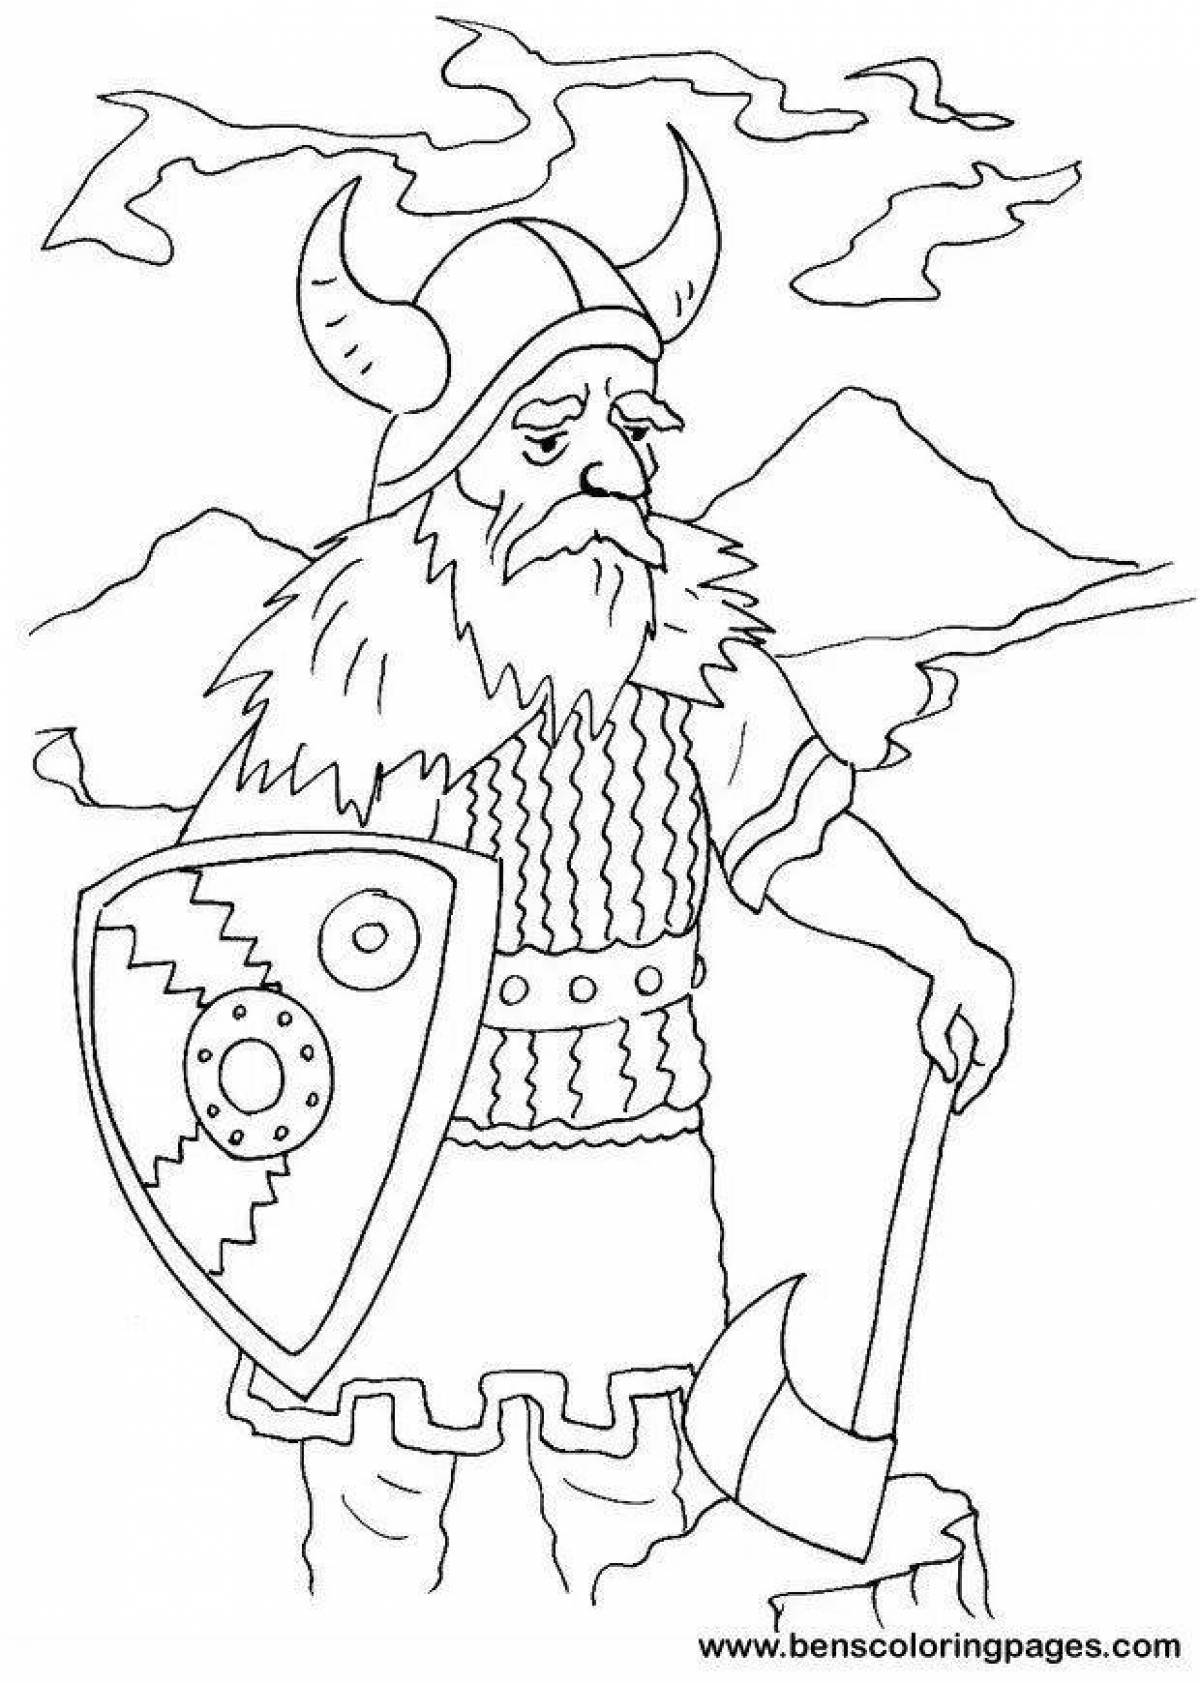 Coloring page bold viking